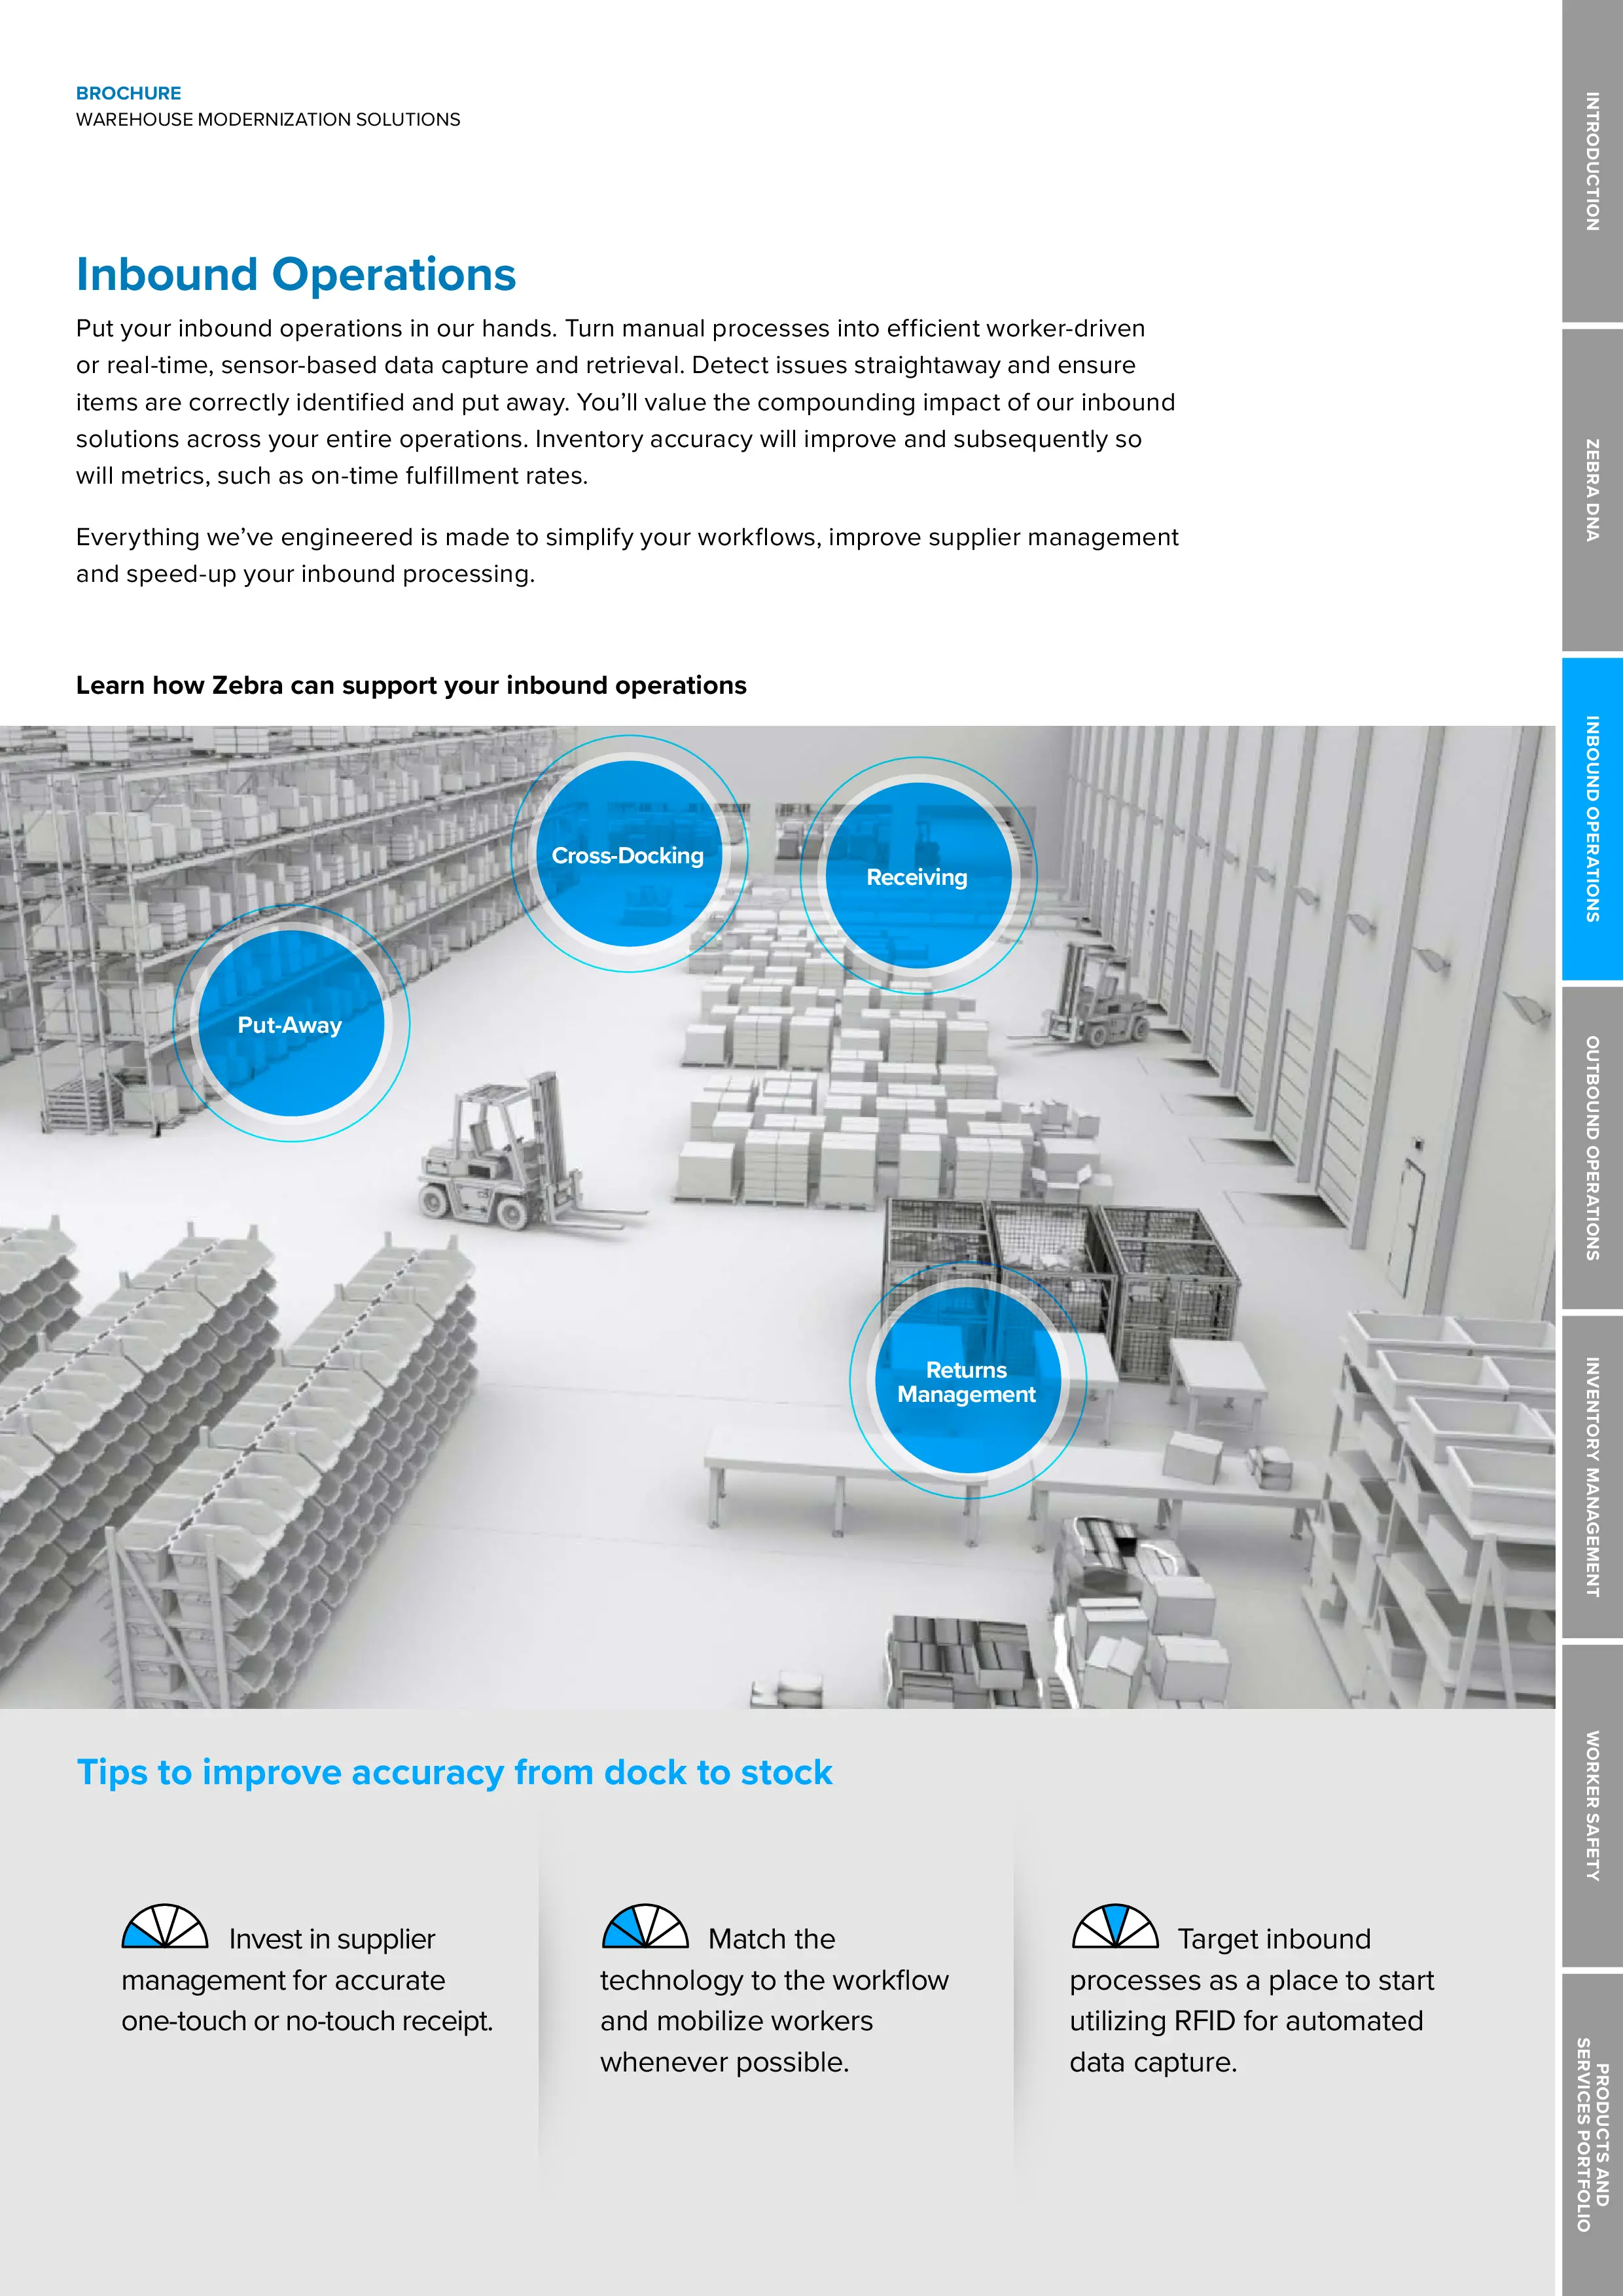 Zebra warehousing solutions brochure (a4)